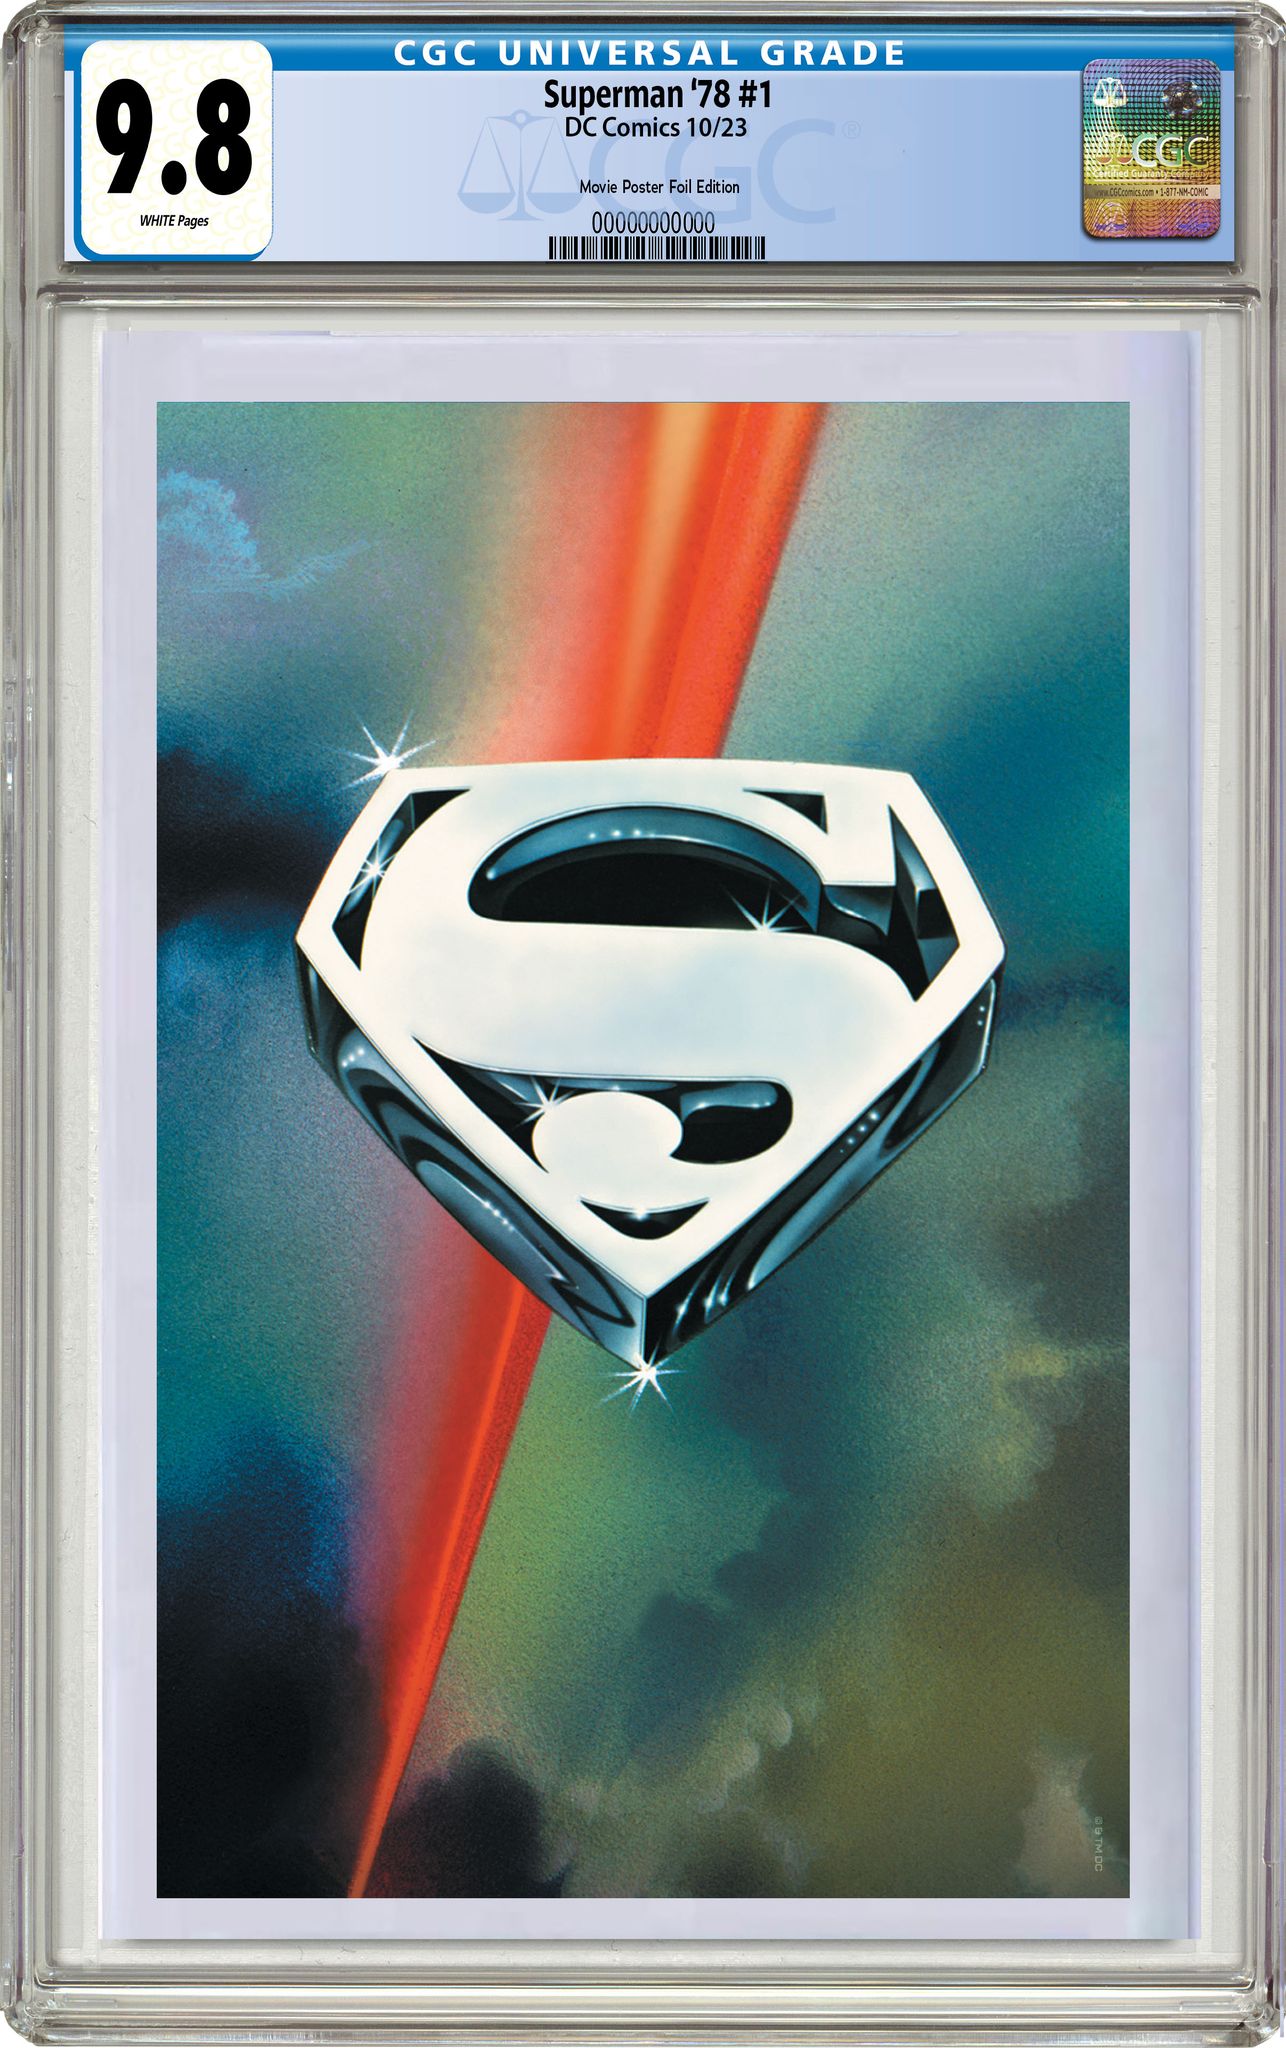 SUPERMAN 78 #1 NYCC EXCLUSIVE LOGO FOIL VARIANT